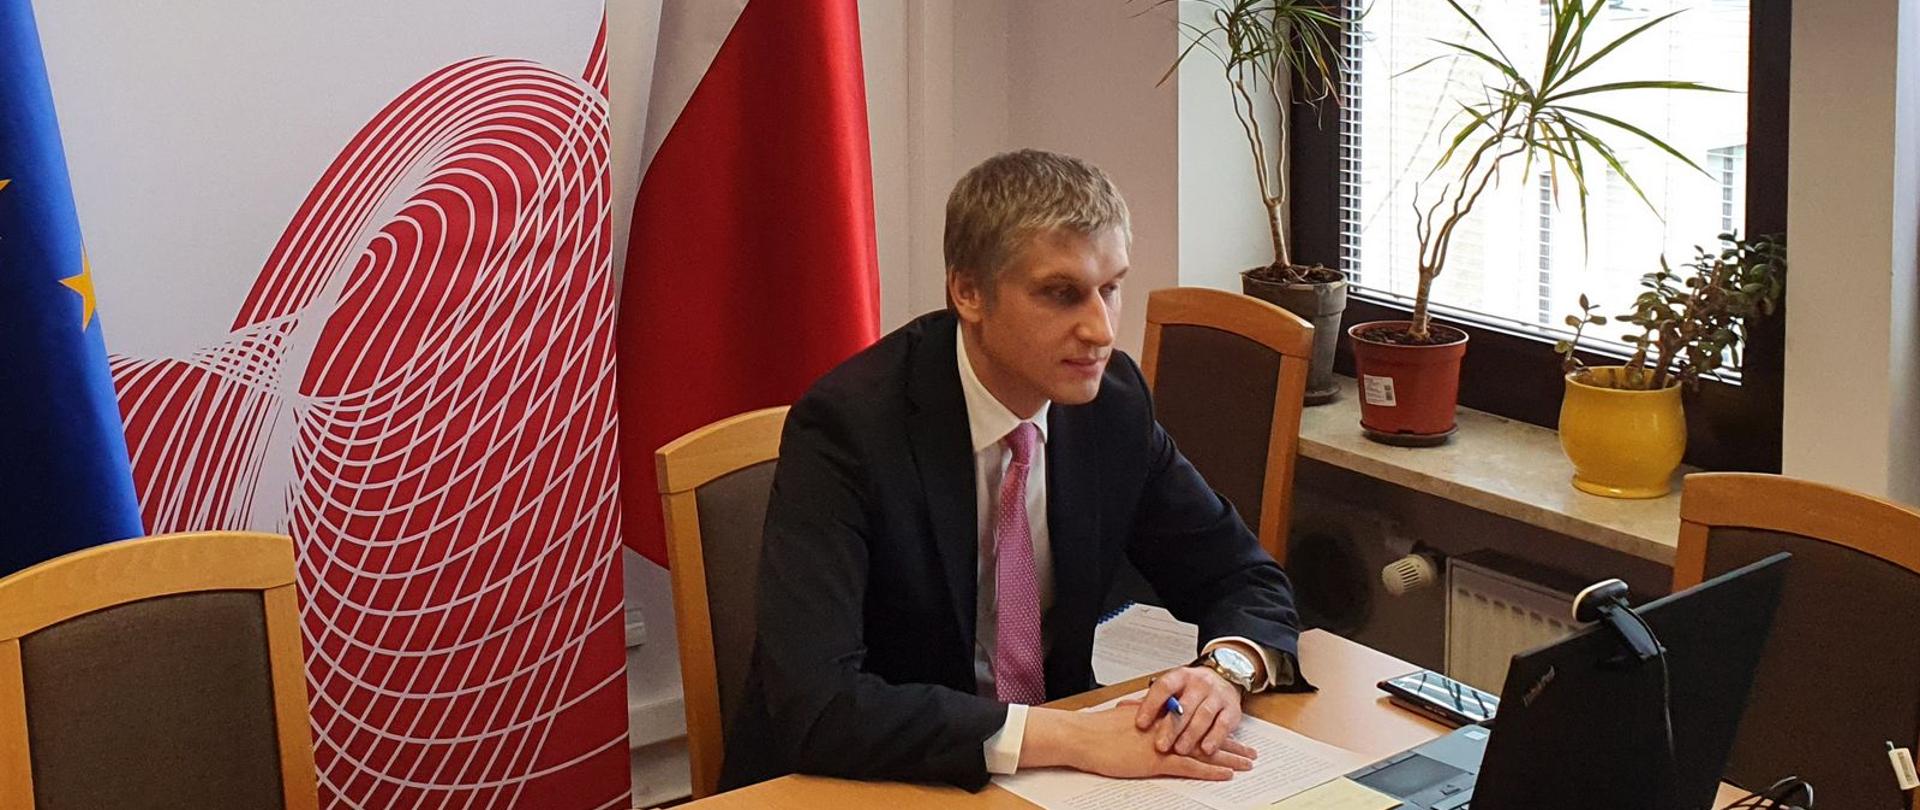 Wiceminister Piotr Nowak podczas telekonferencji.